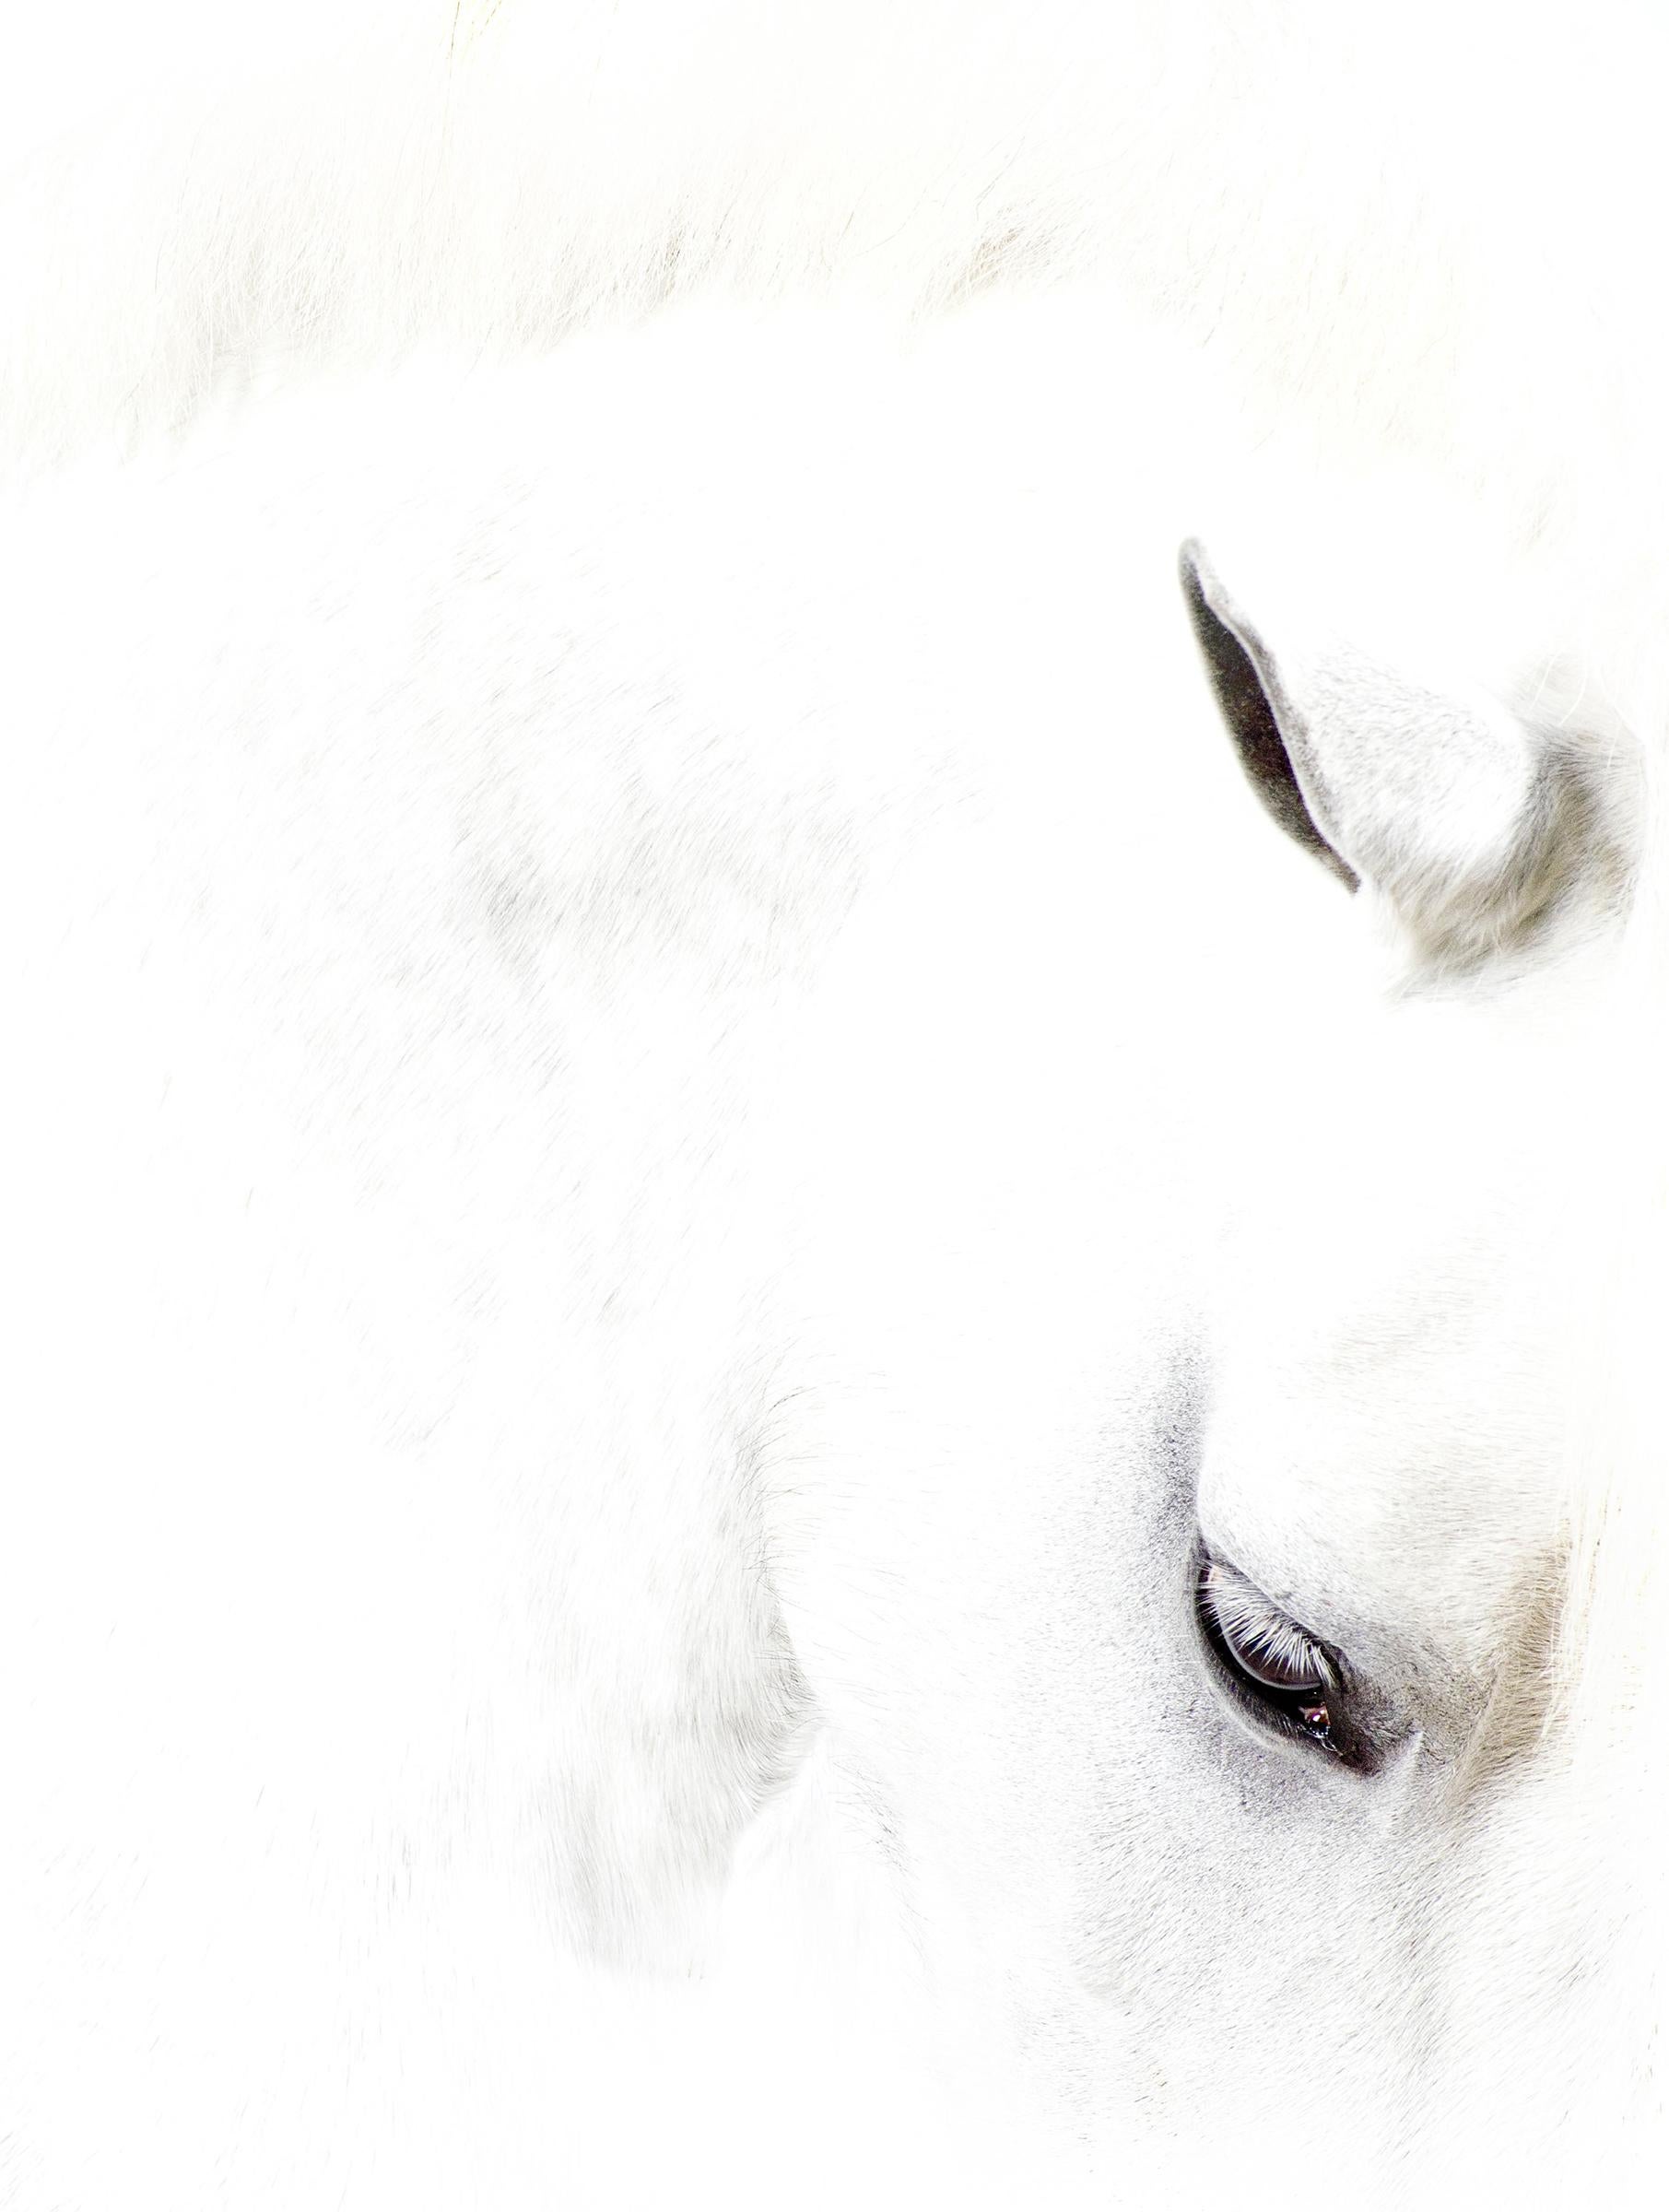 Shelli Breidenbach Color Photograph - Tango's Eye, 2015, Fine Art Equine Photography, Print Only